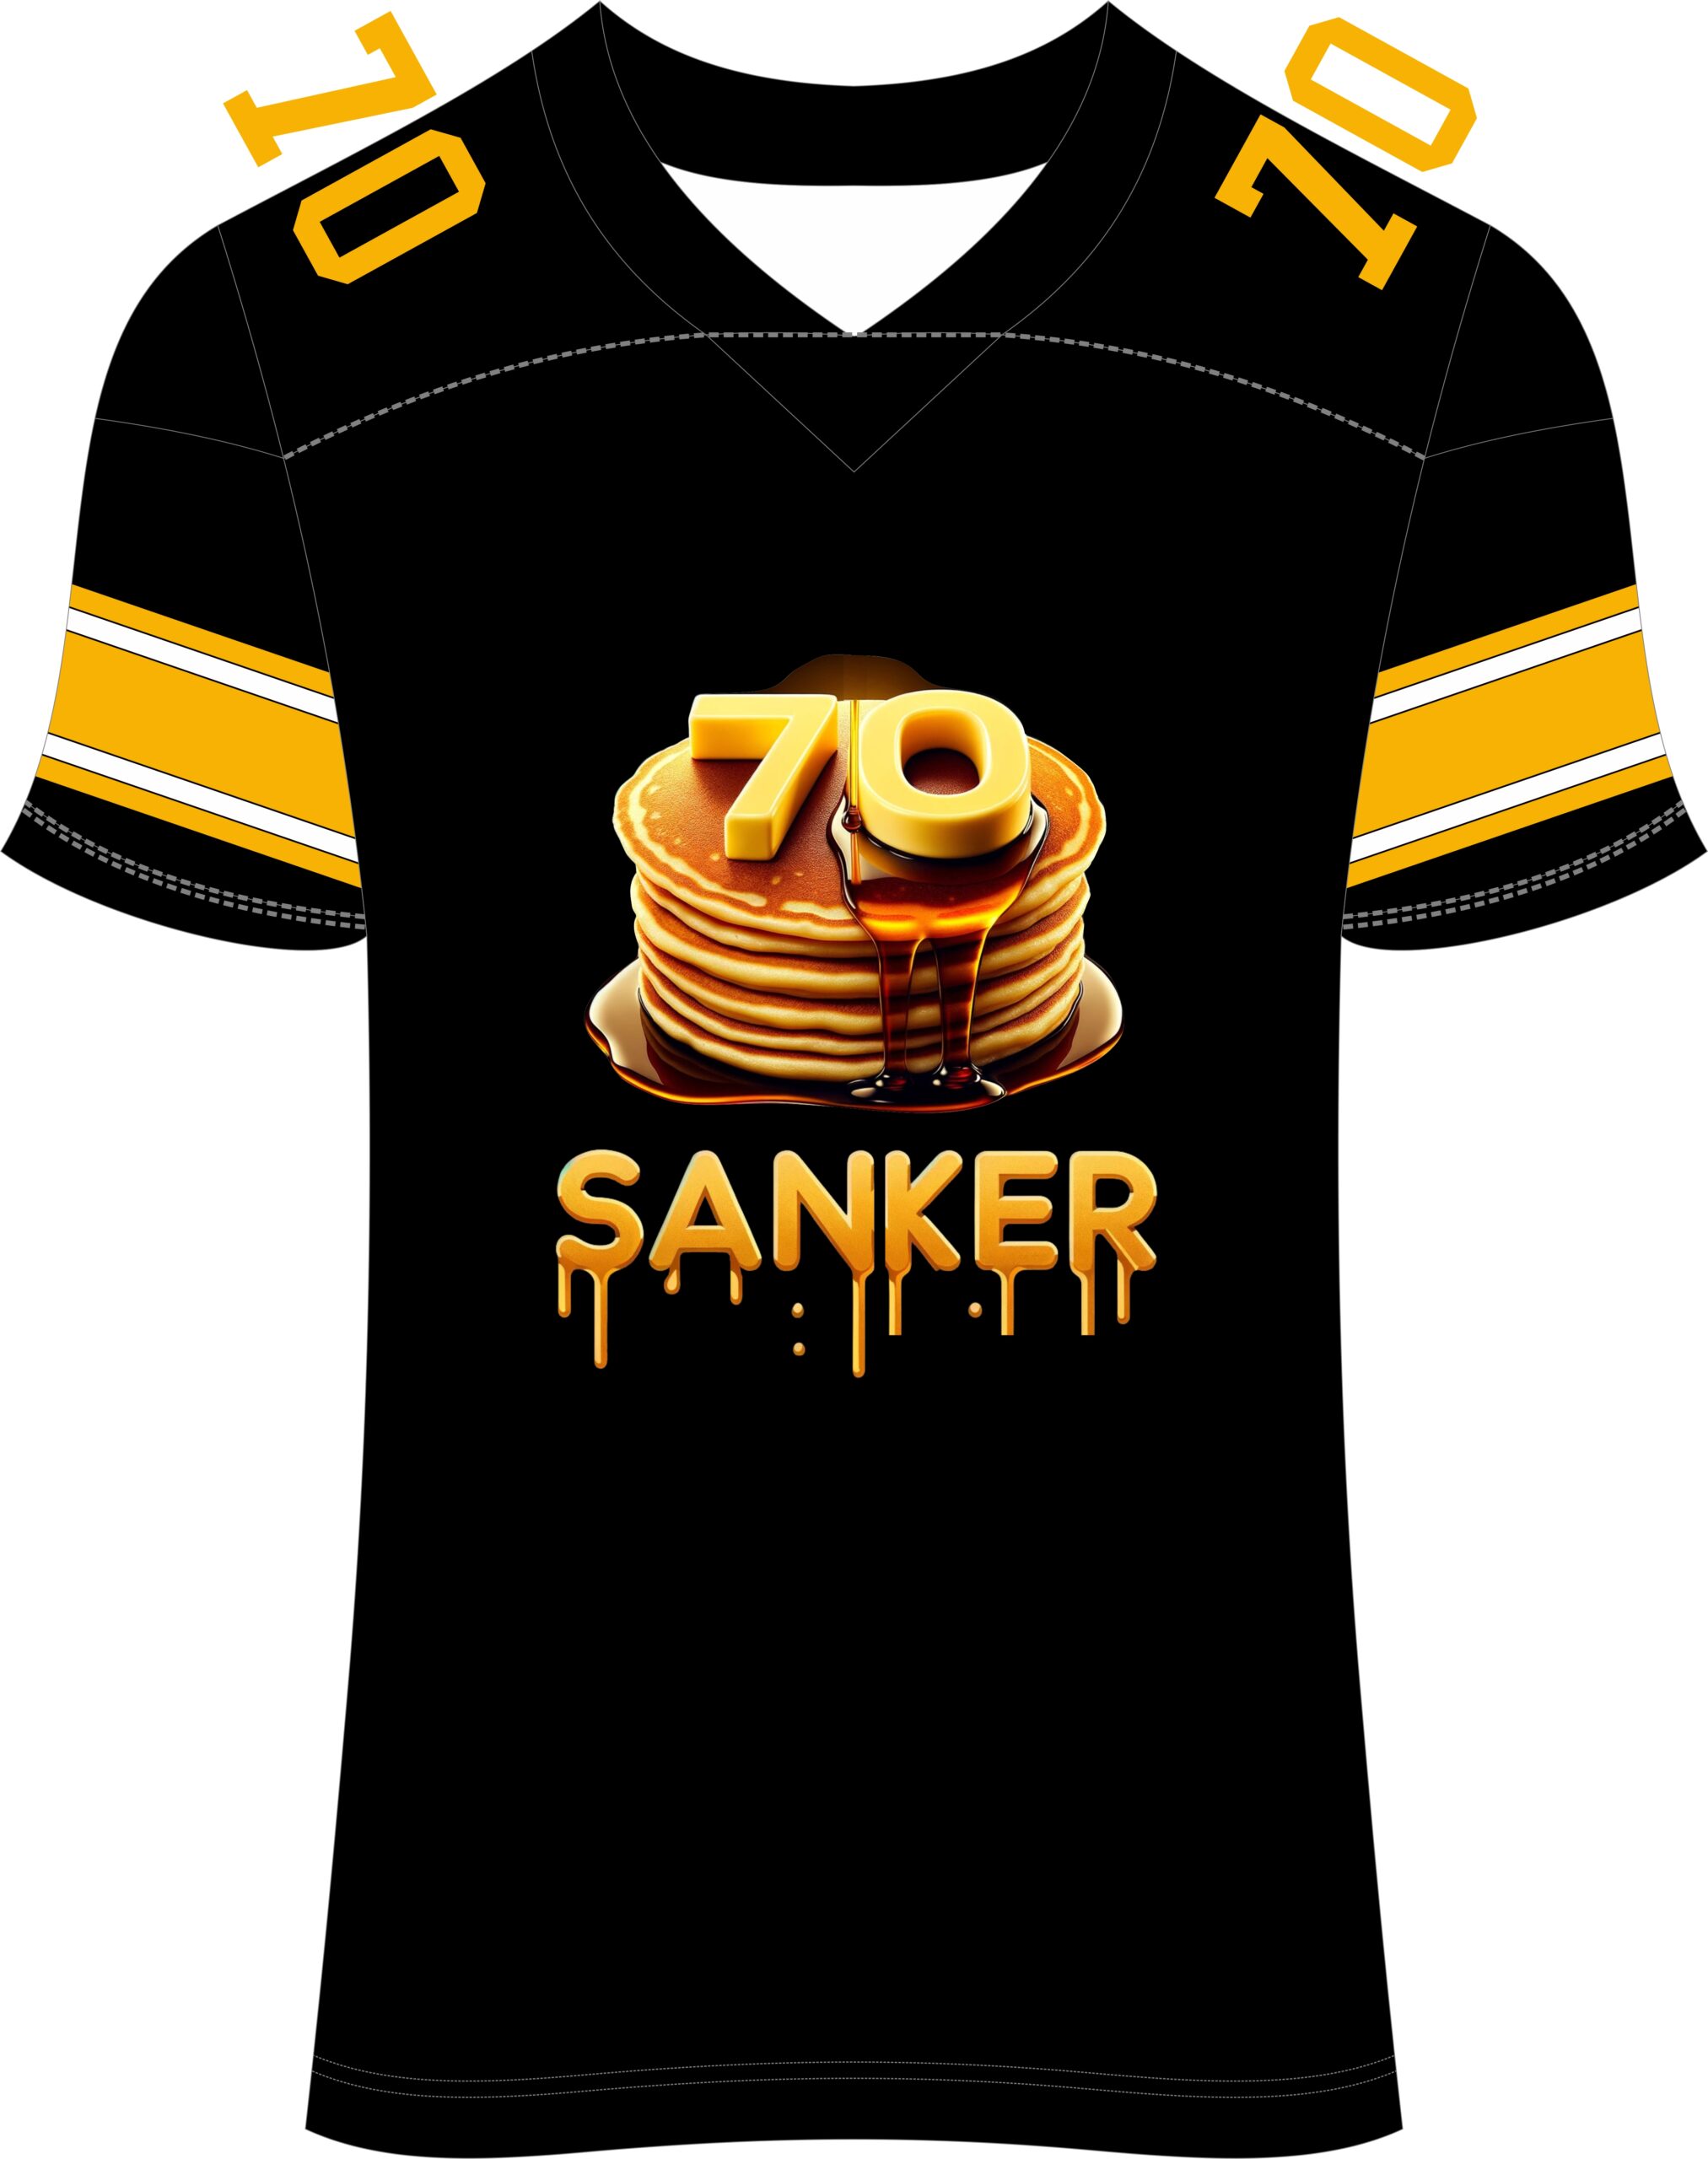 Pancake Football Jersey